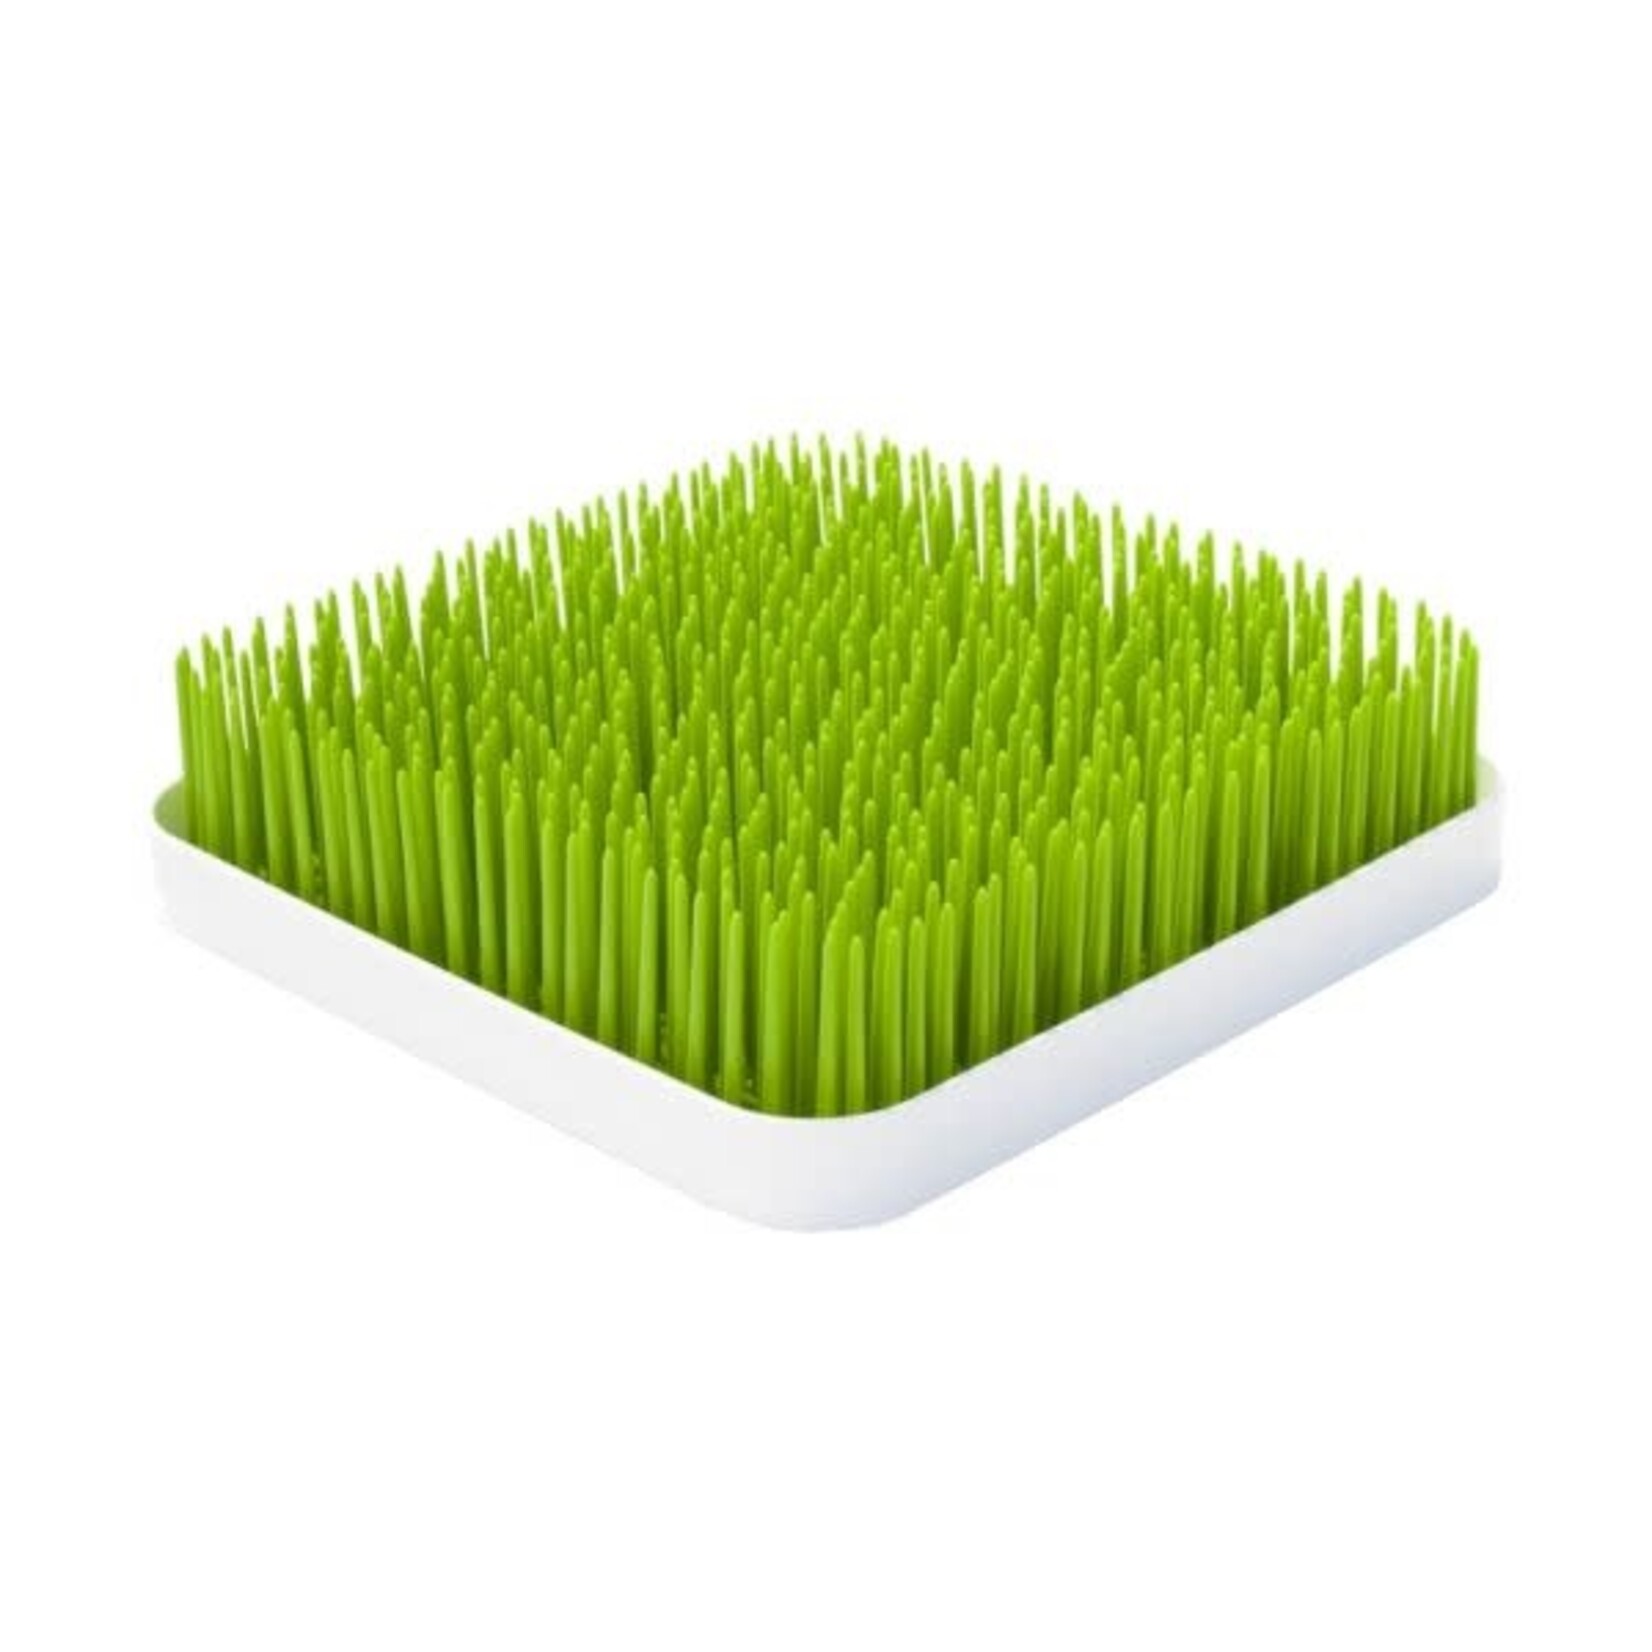 Boon Boon - Afdruiprekje Grass Groen